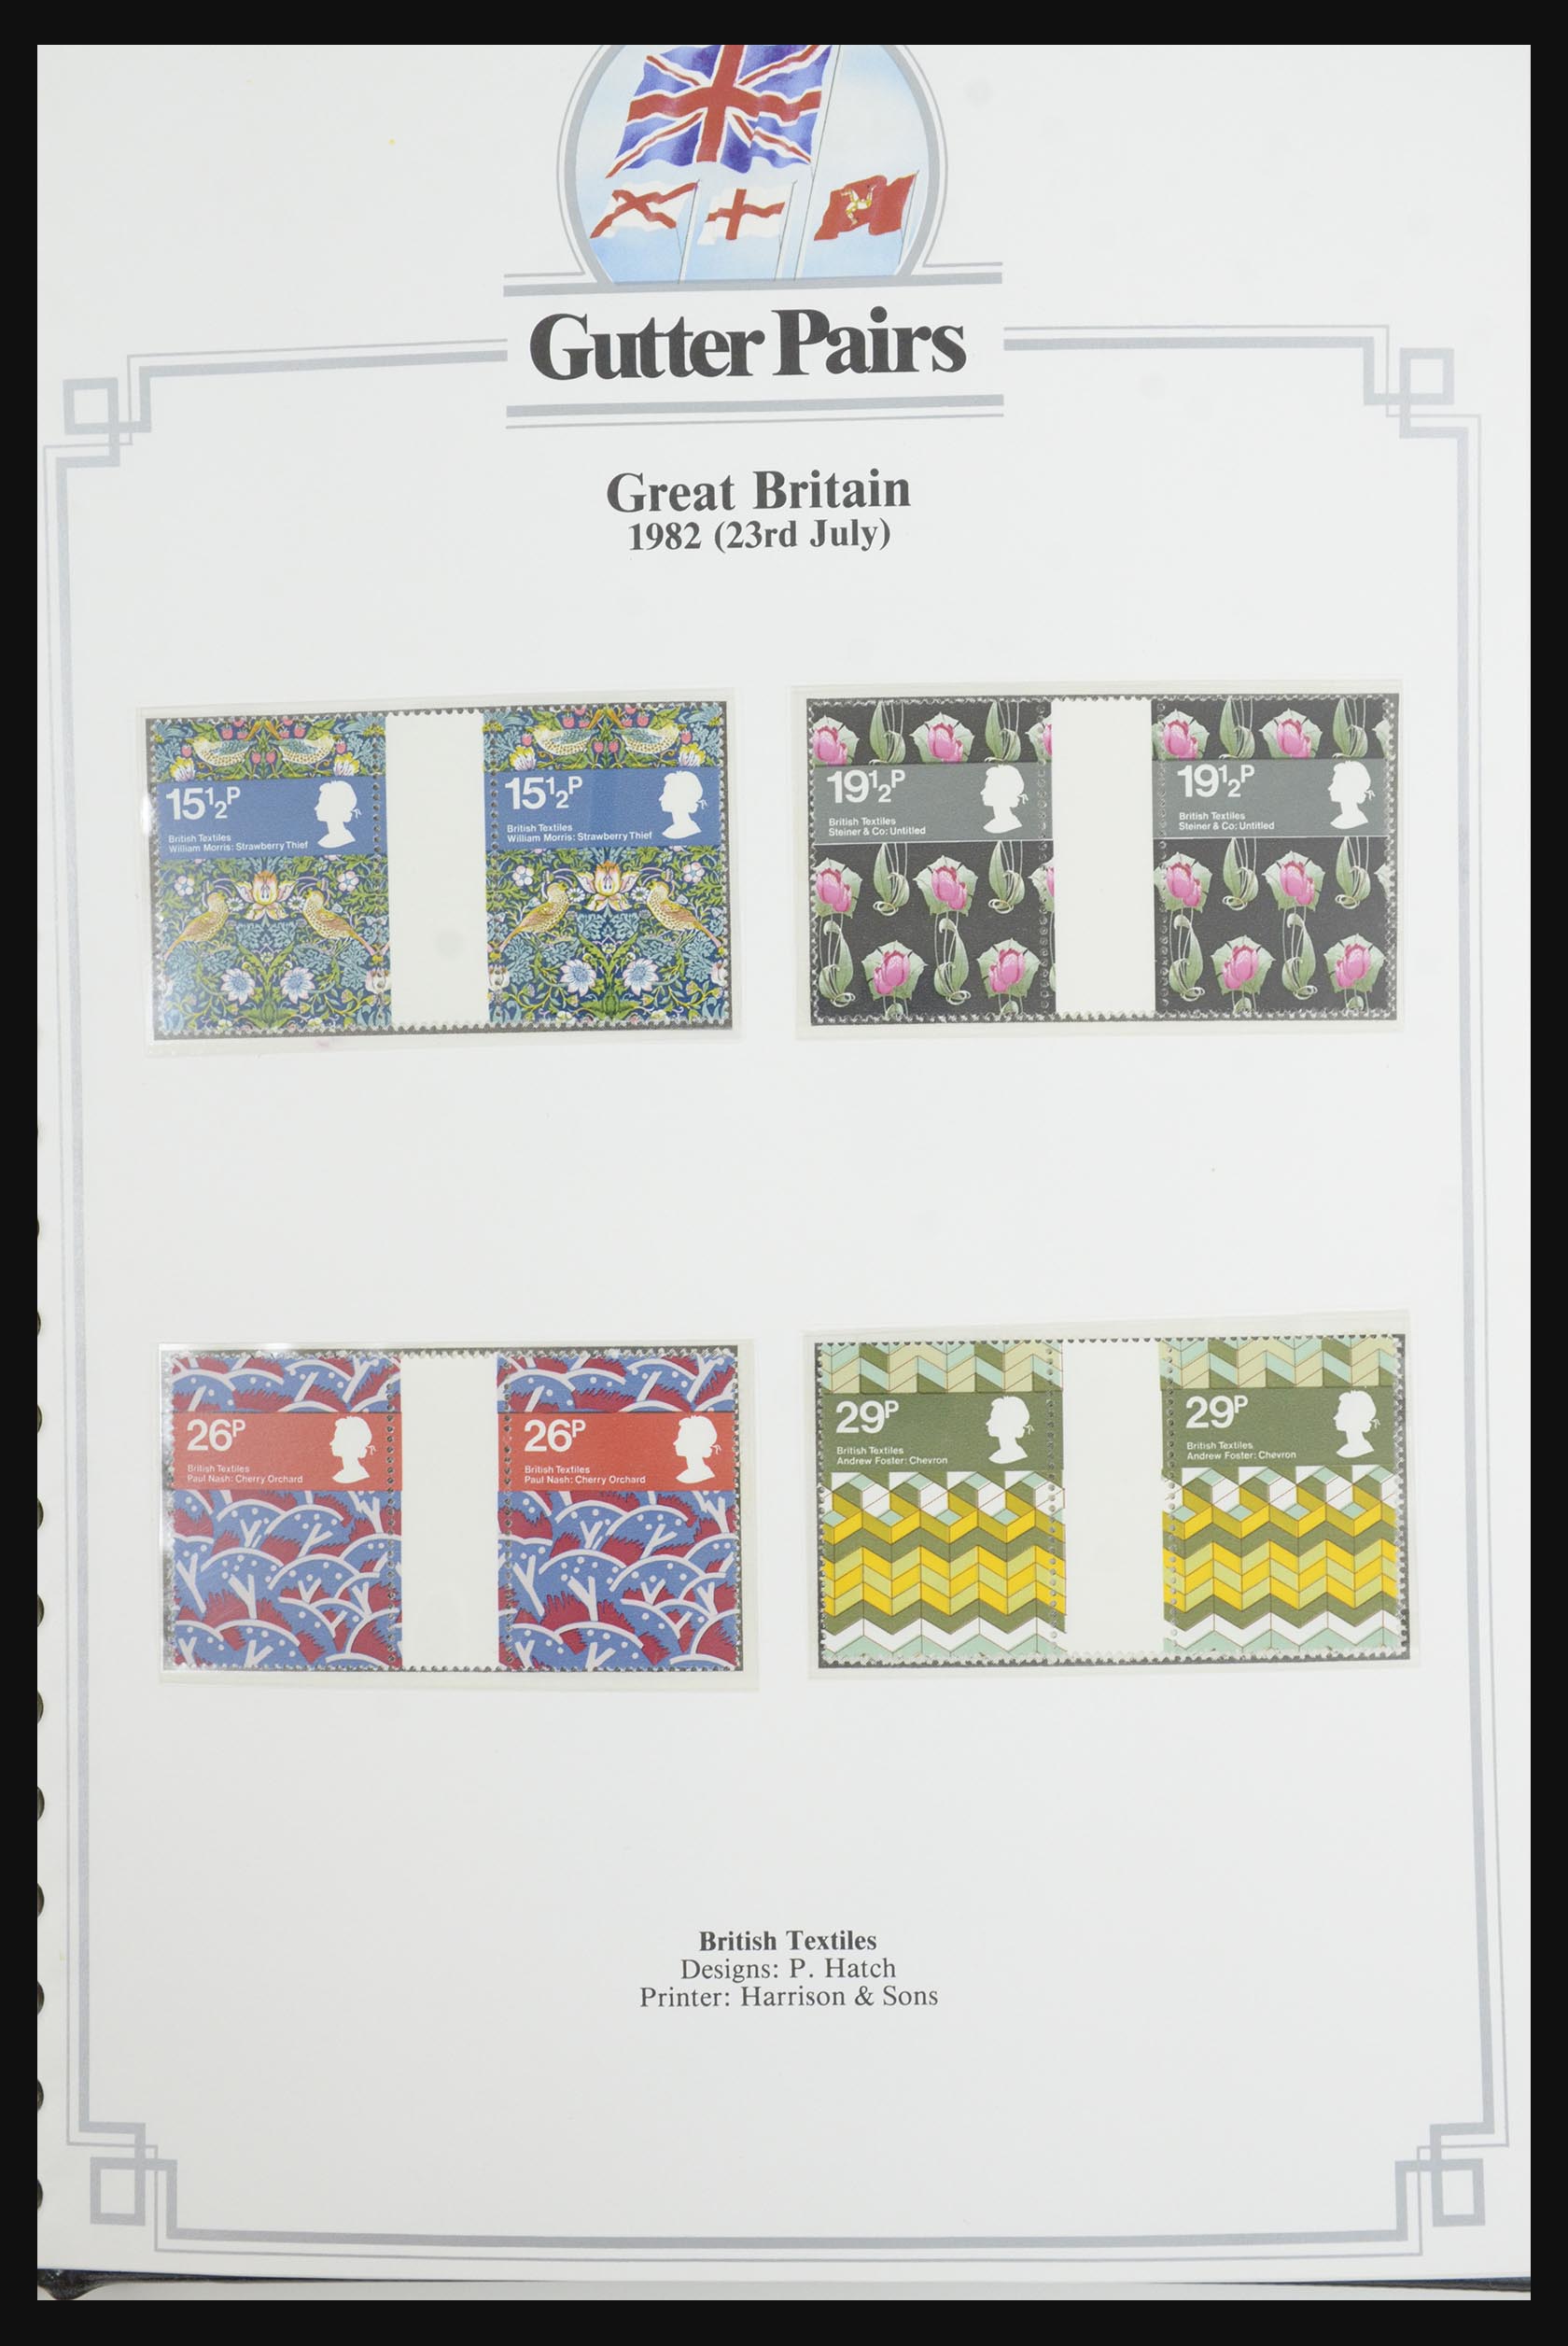 31717 031 - 31717 Great Britain gutterpairs 1976-1991.